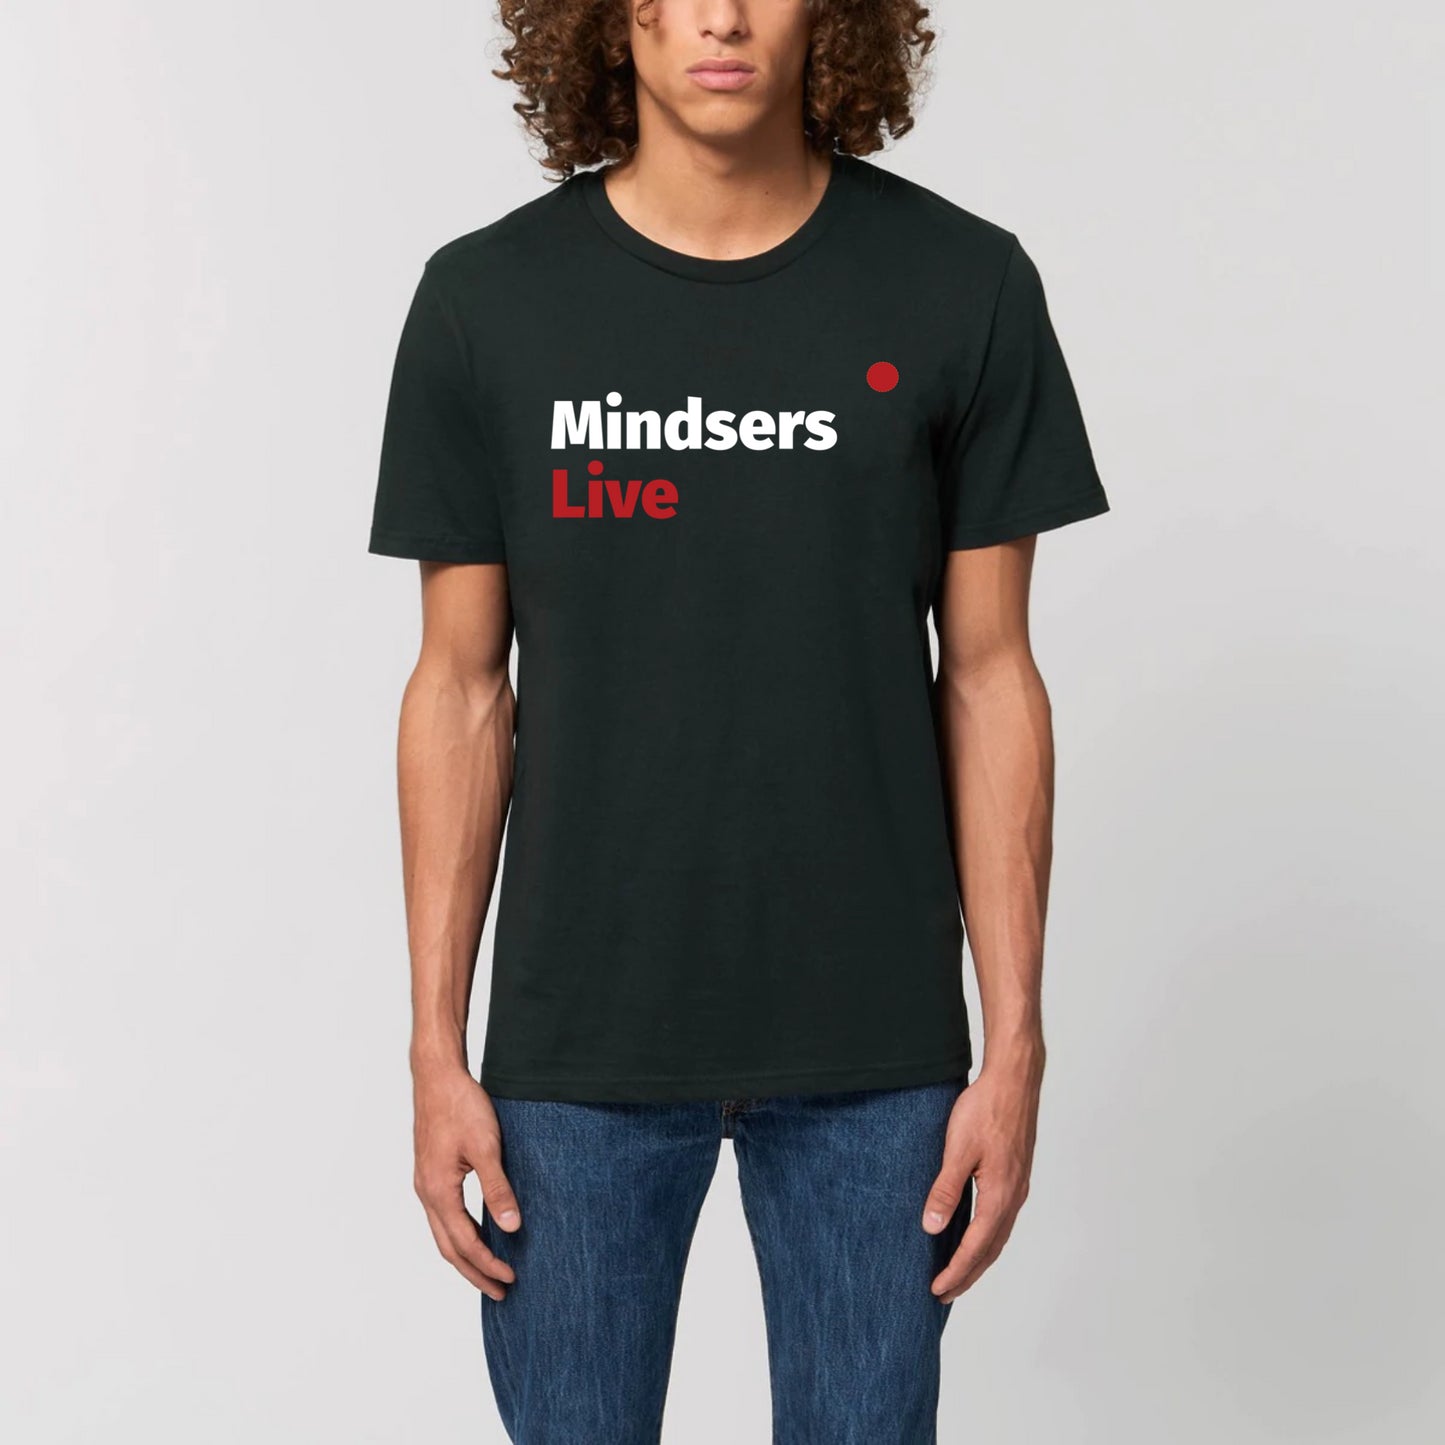 Mindsers Live – t-shirt, unisex, organic